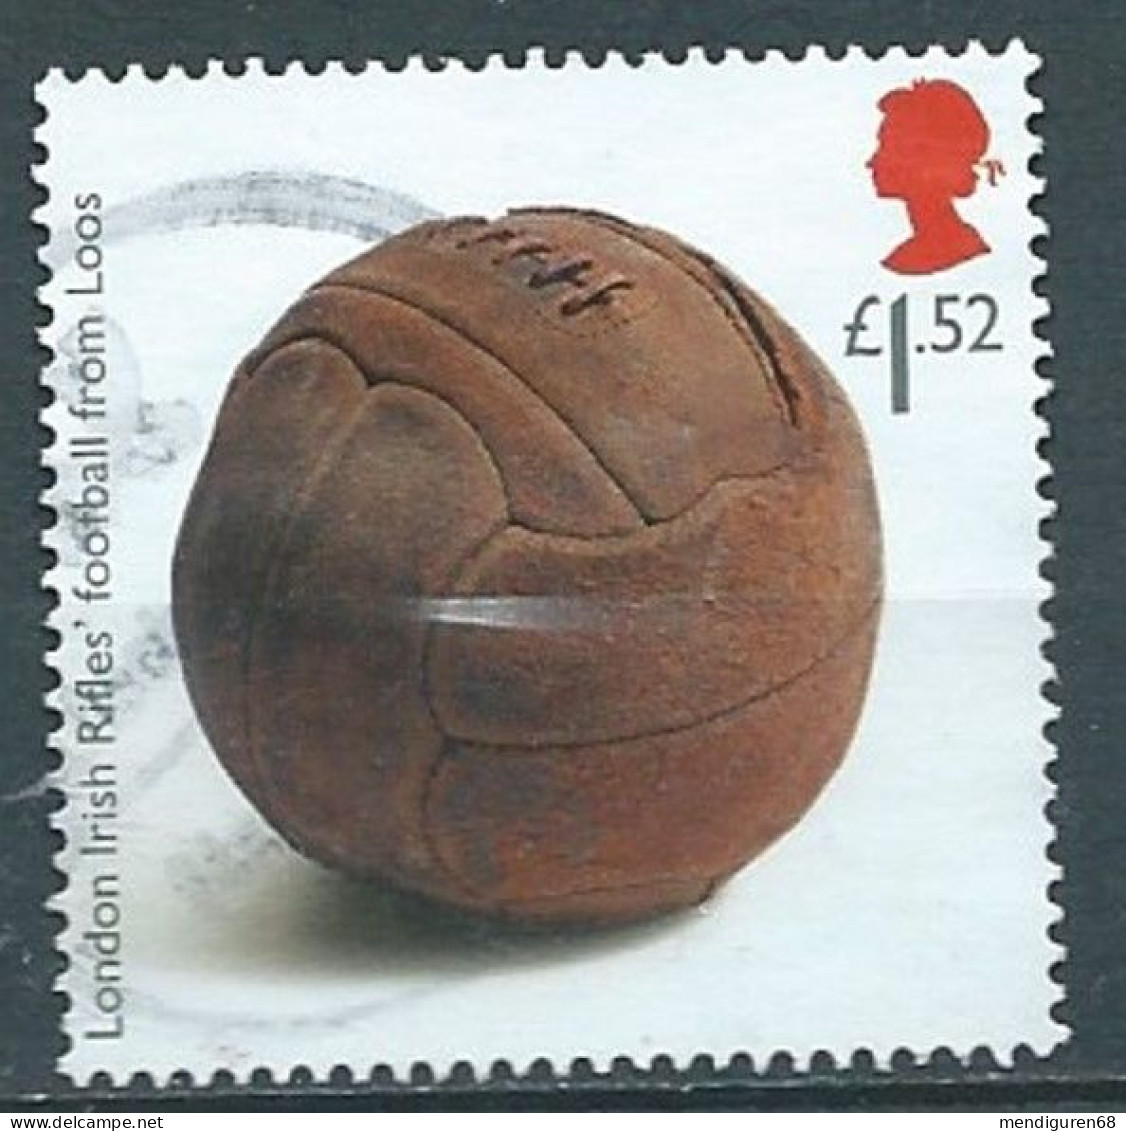 GROSSBRITANNIEN GRANDE BRETAGNE GB 2015 GREAT WAR I LONDON IRISH RIFLES’ FOOTBALL FROM LOOS £1.52 SG 3716 MI 3744 YT 416 - Used Stamps